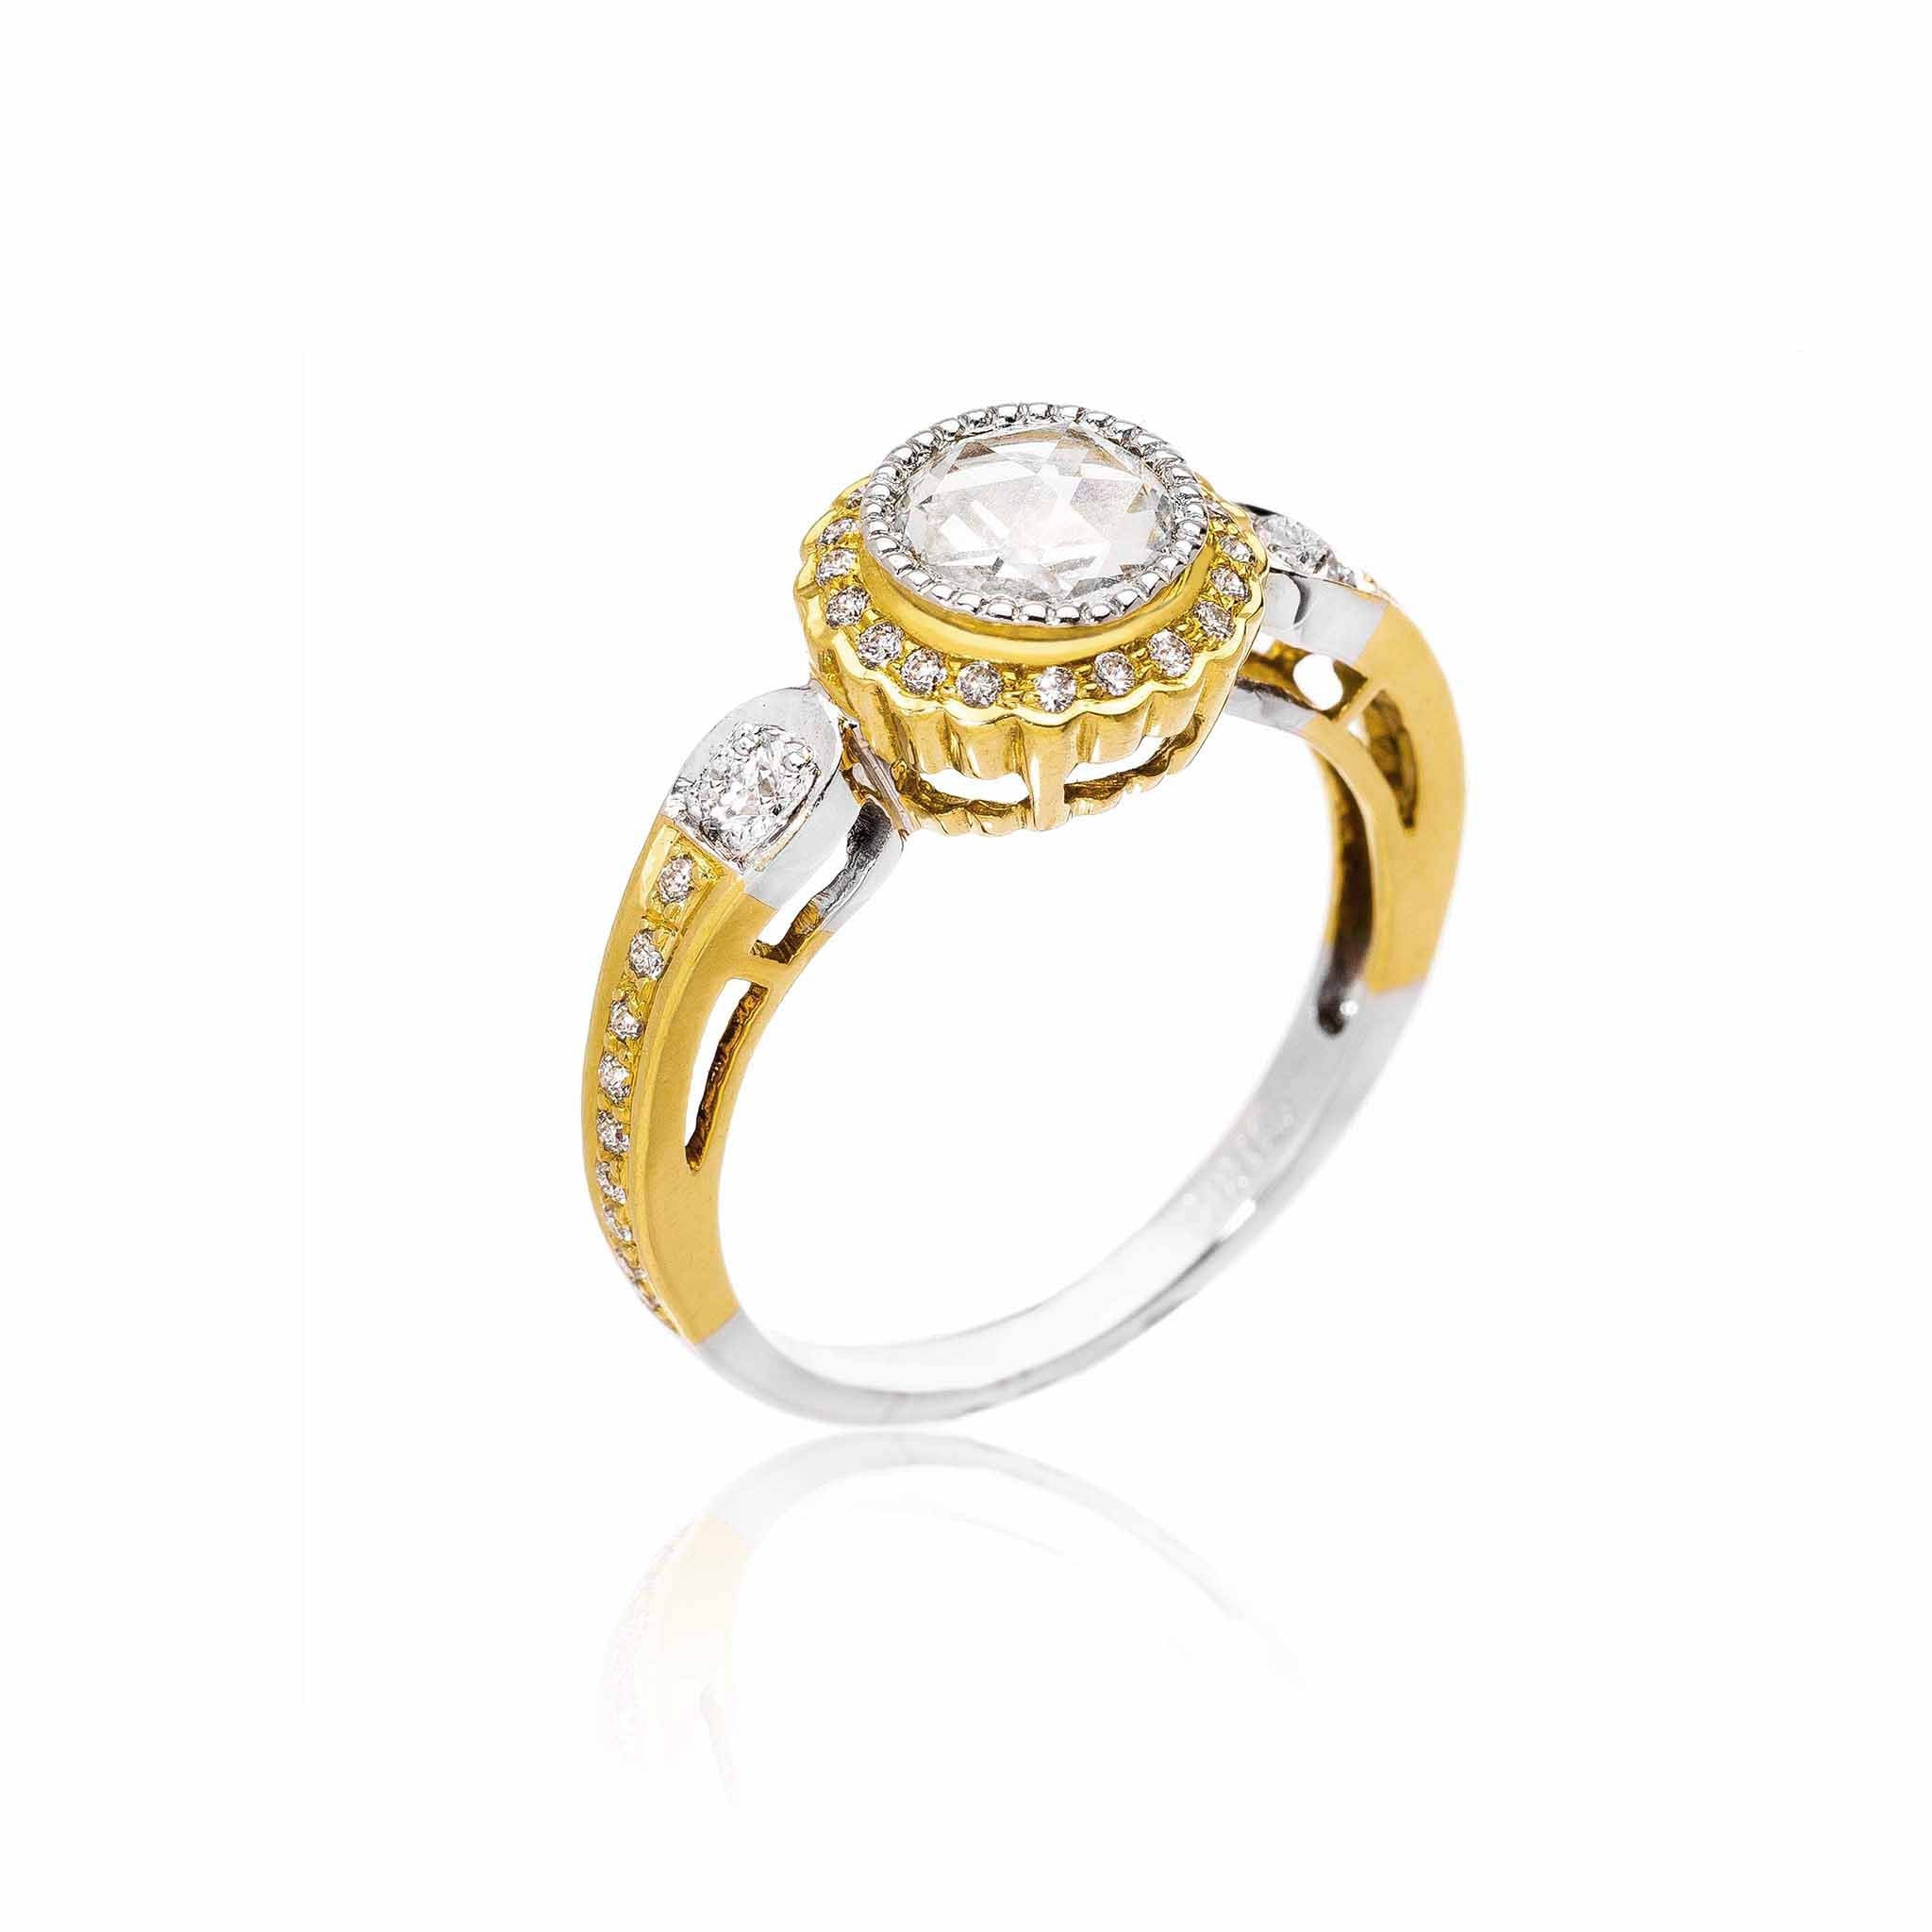 True Romance Rose Cut Diamond Ring in Yellow Gold